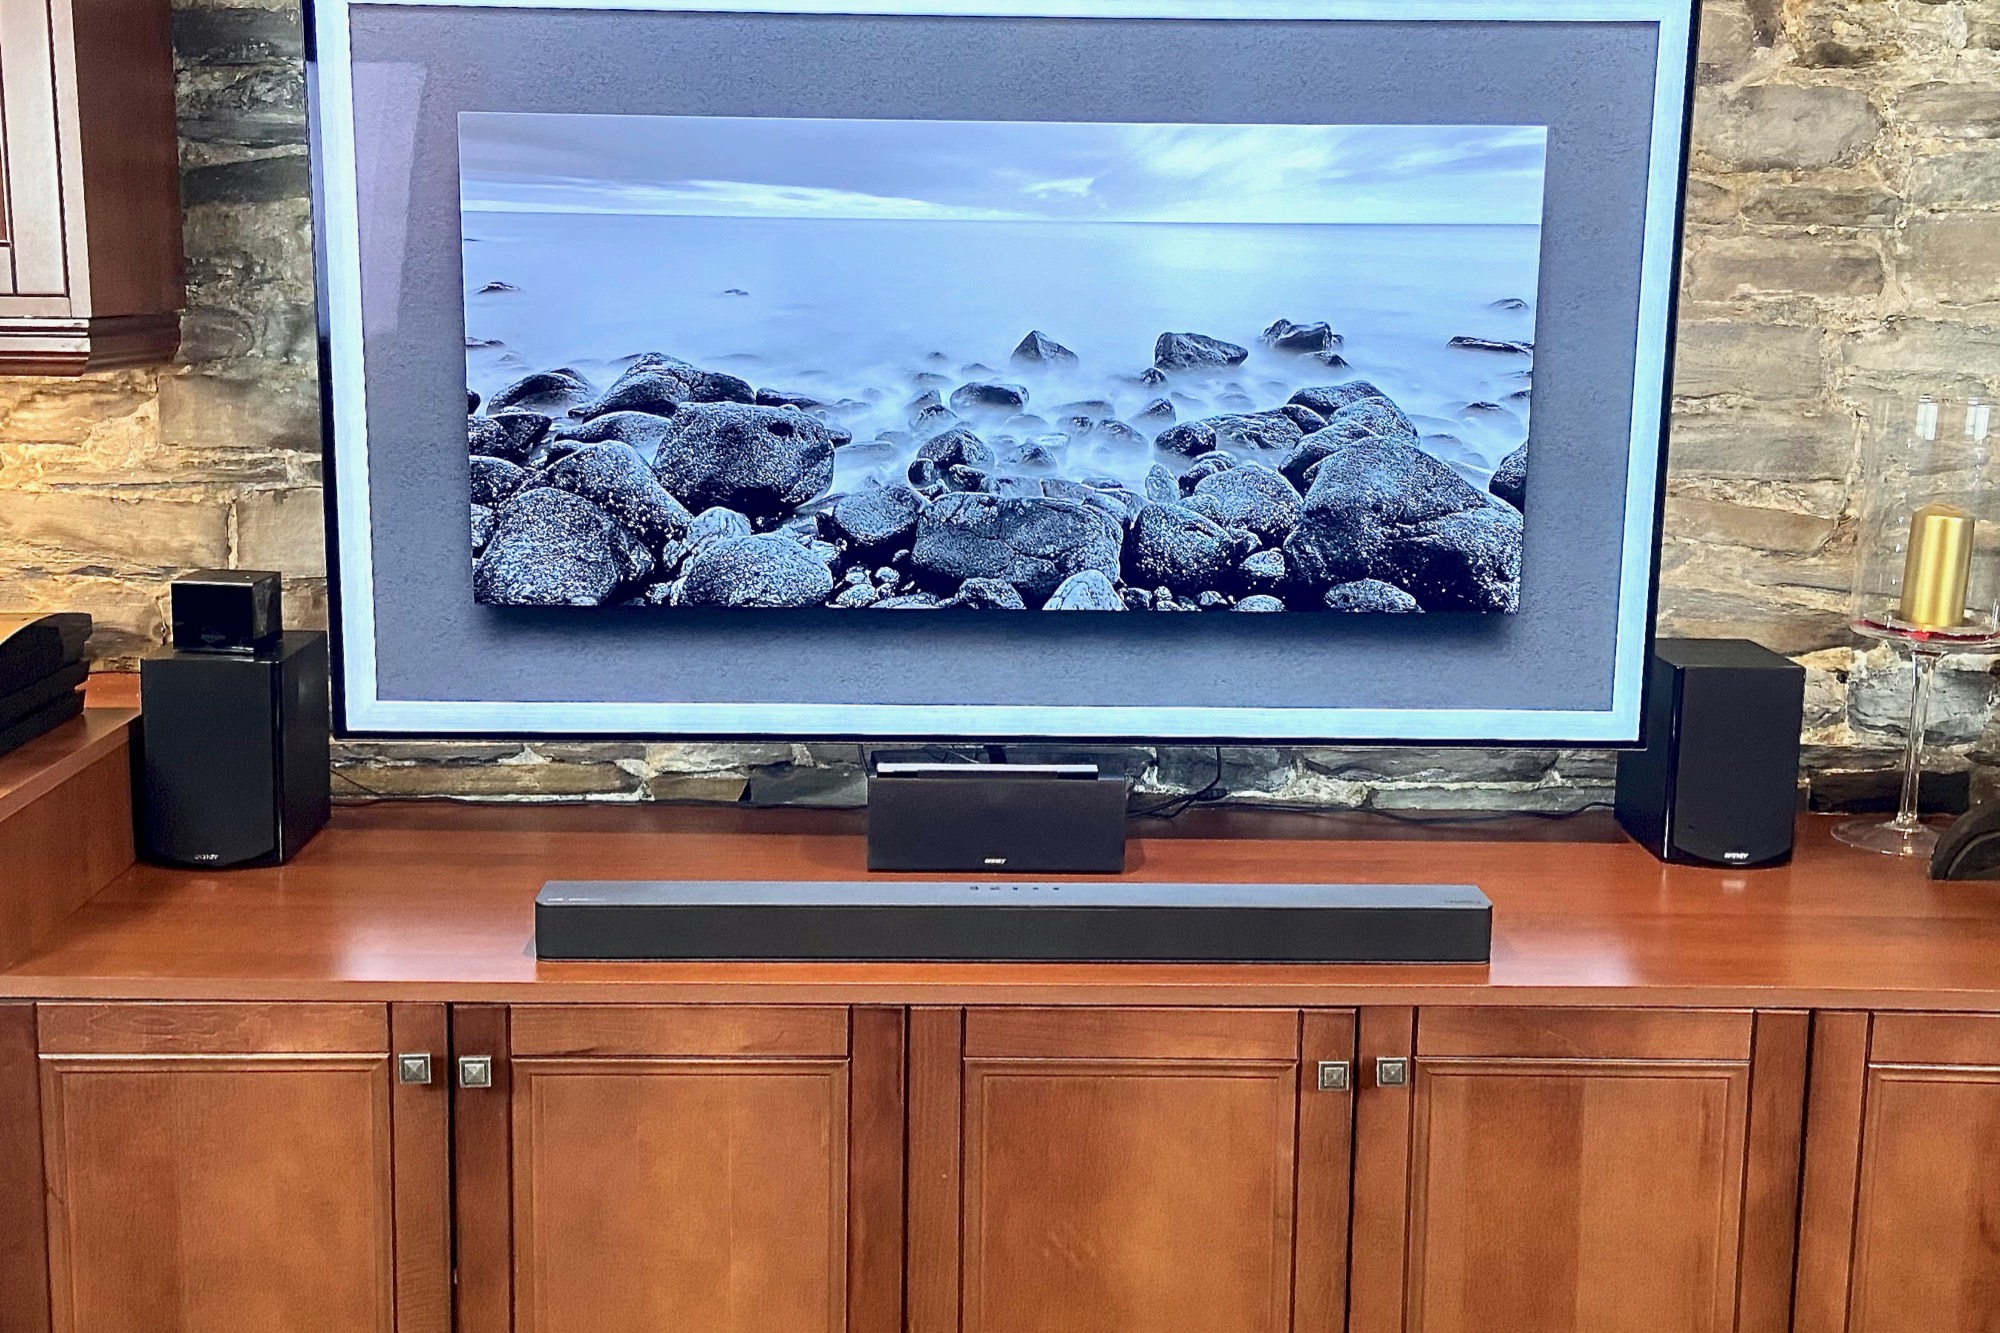 Vizio M-Series 2.1 soundbar below a 65-inch TV.